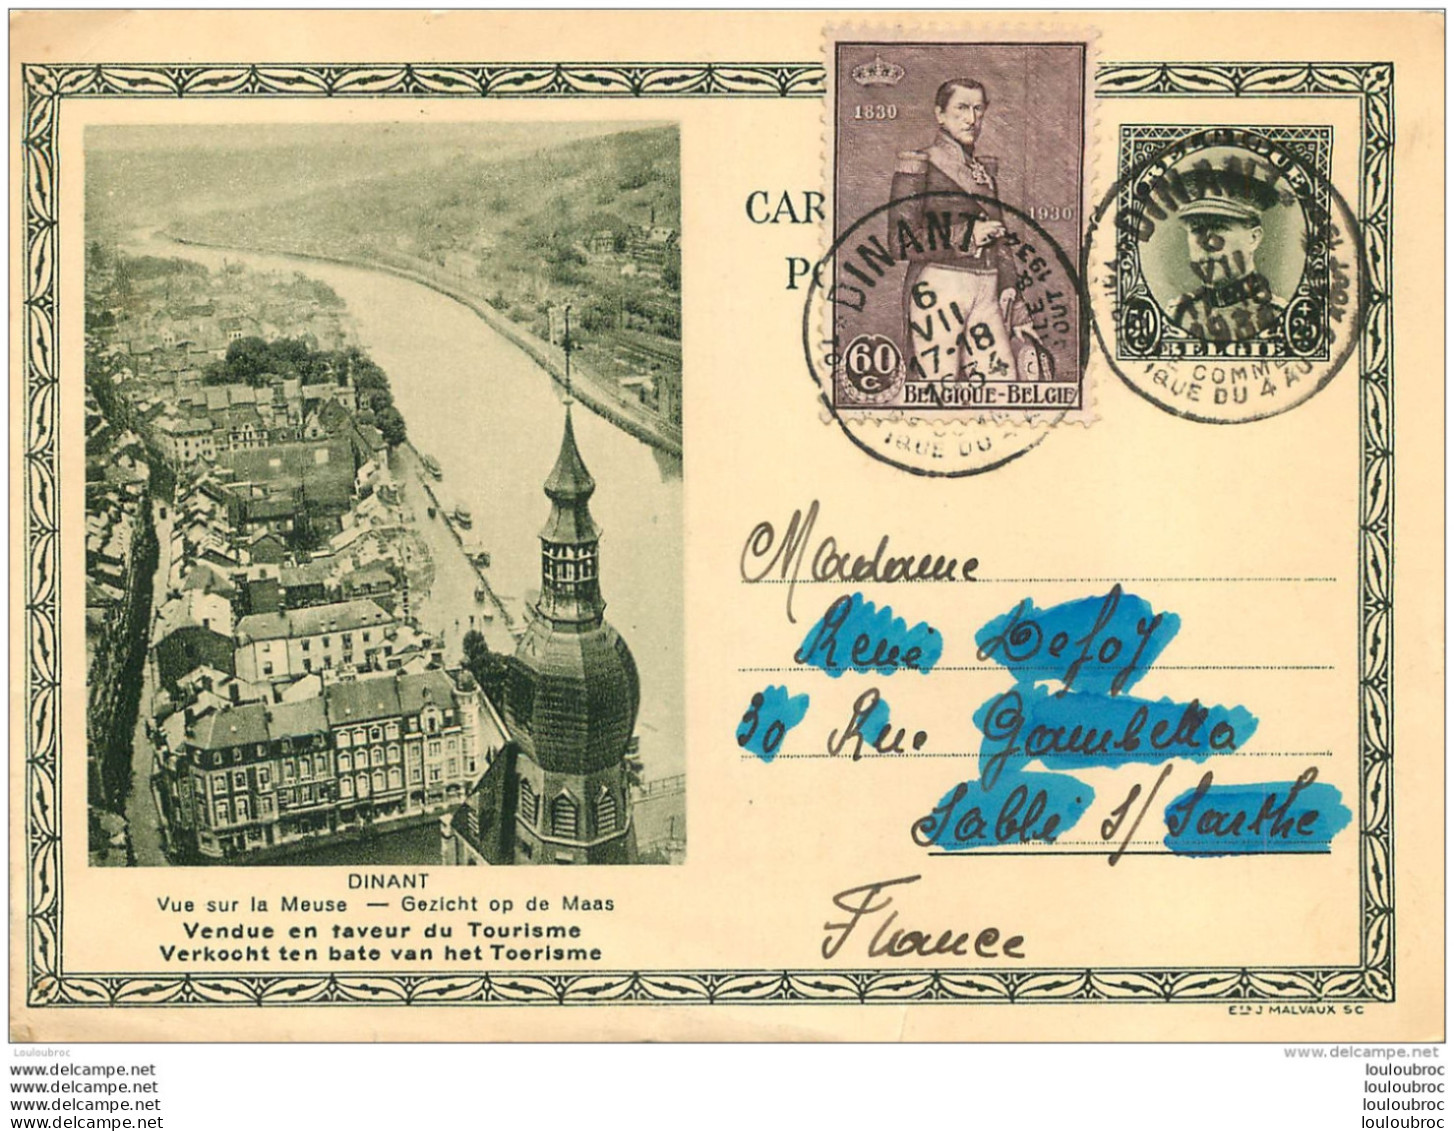 DINANT VUE SUR LA MEUSE OBLITEREE A DINANT EN 1934 - Illustrierte Postkarten (1971-2014) [BK]